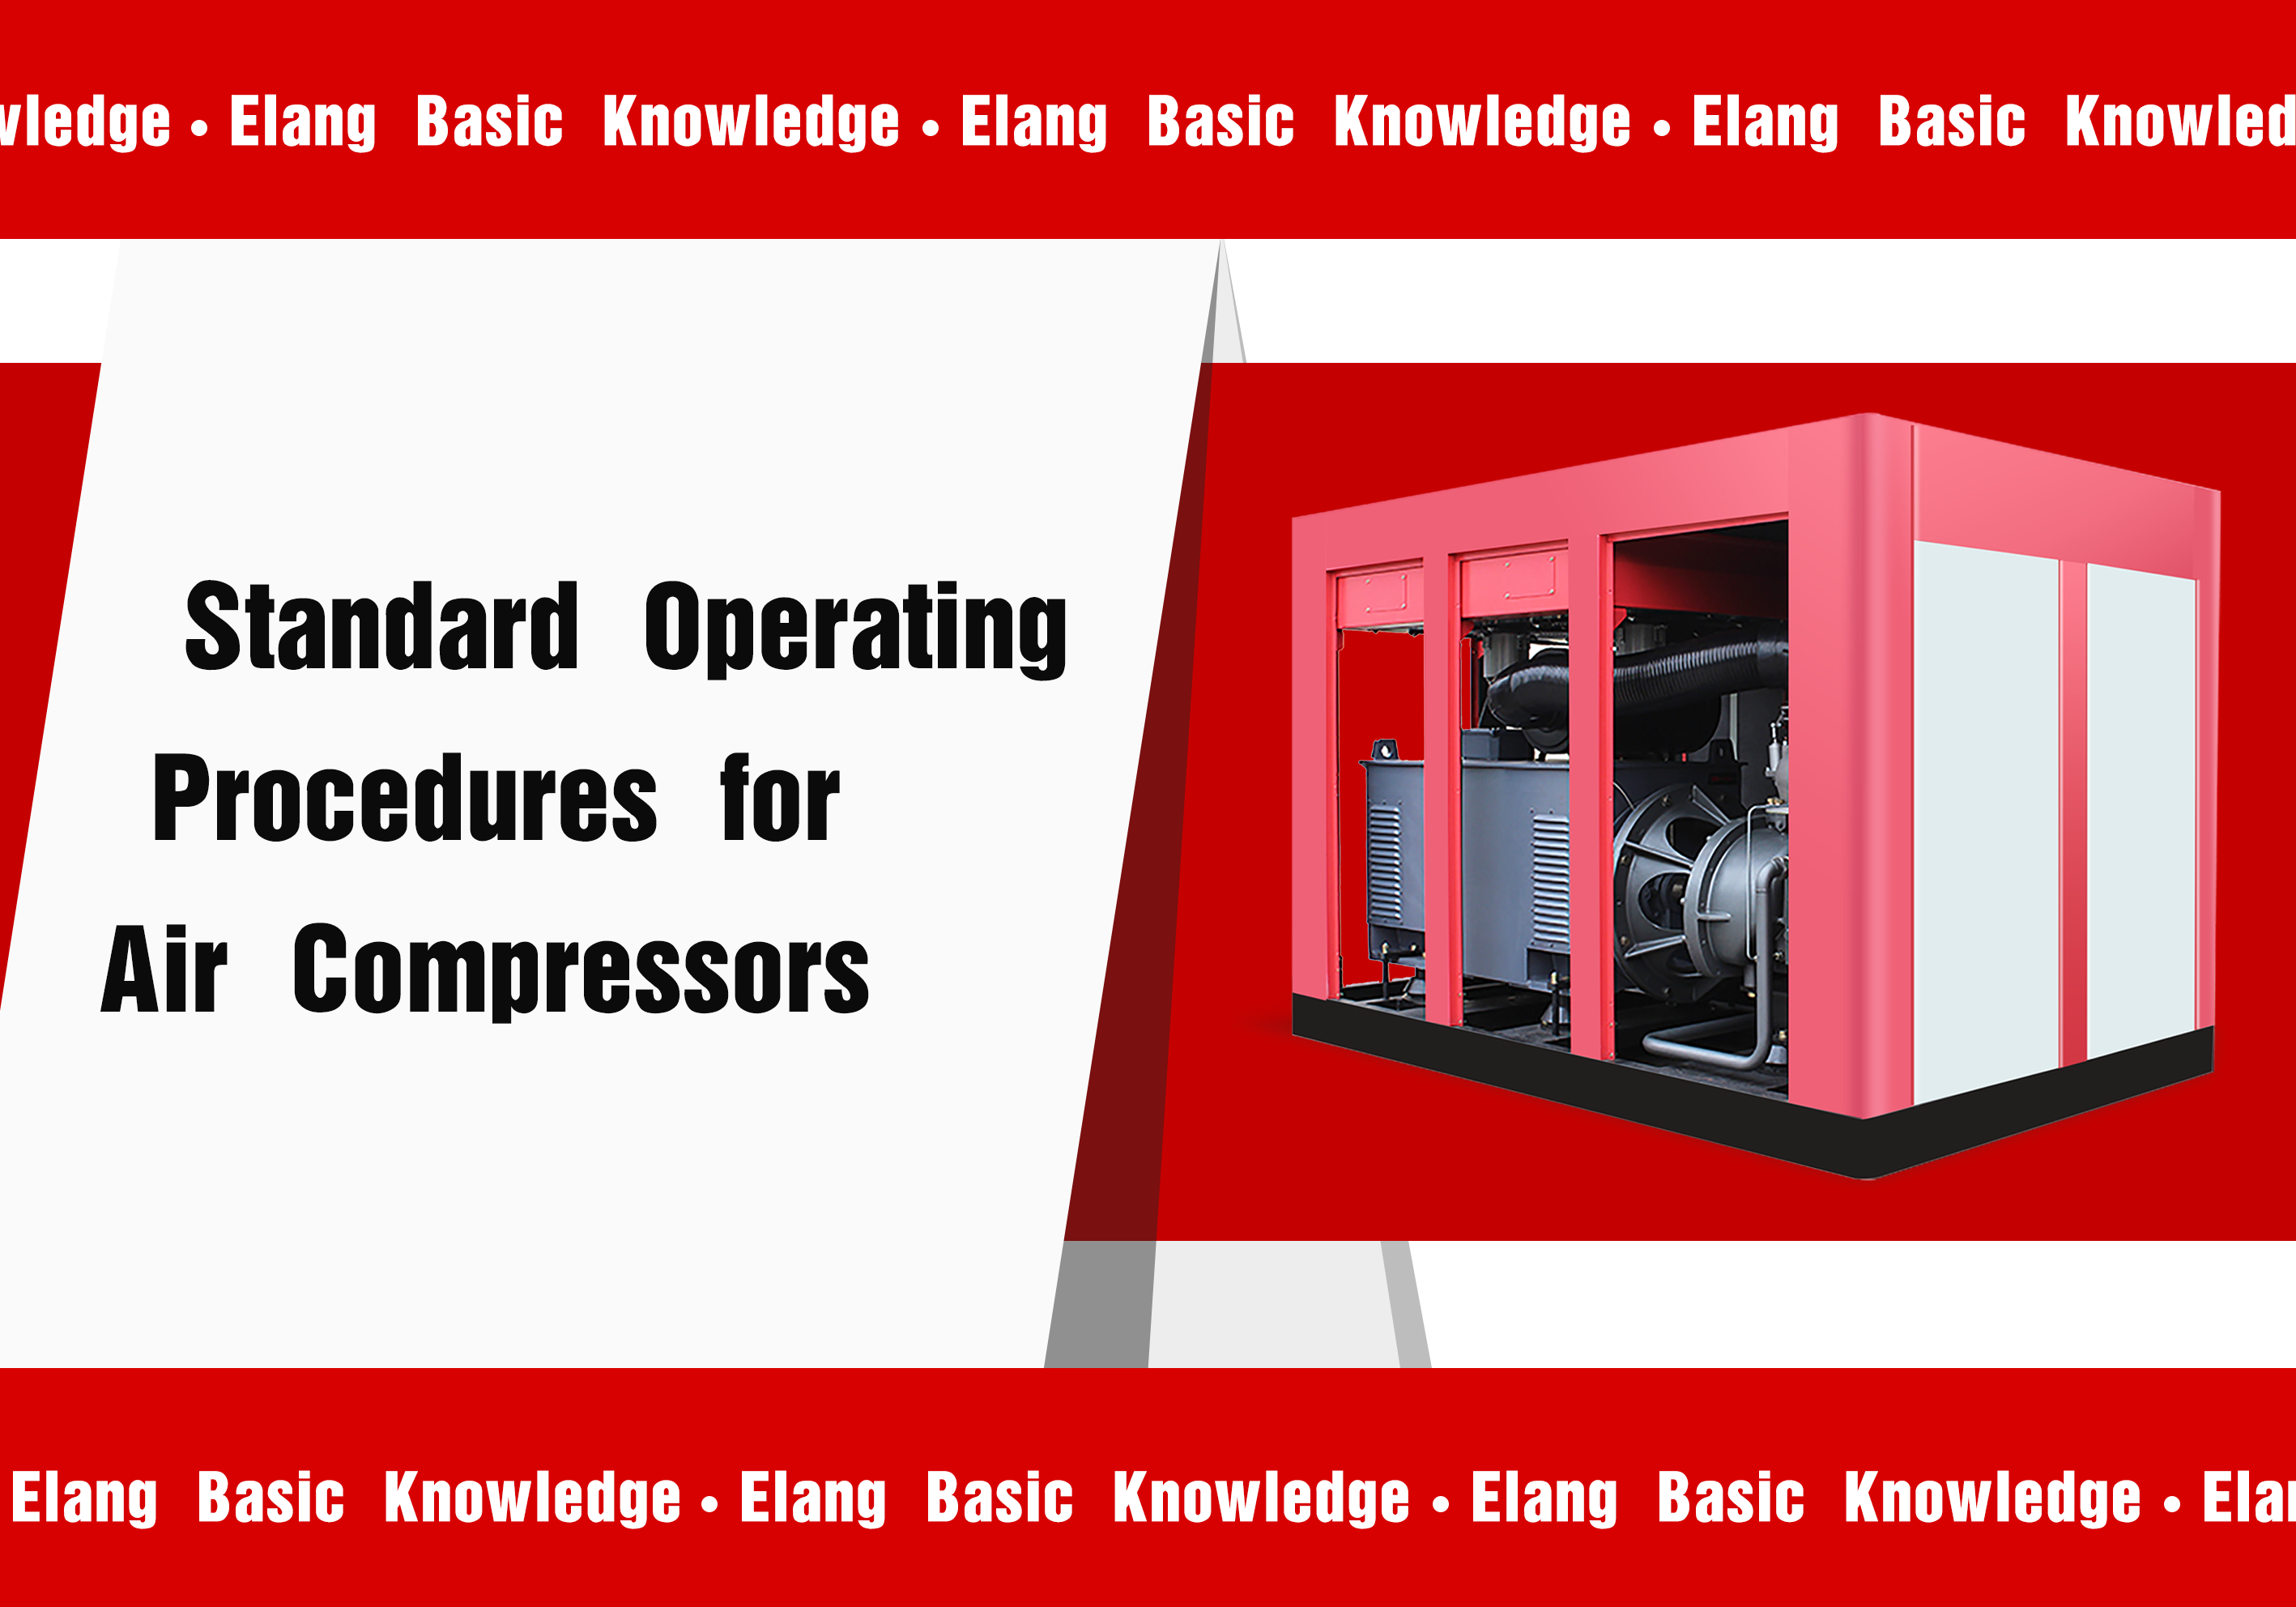 Standard Operating Procedures for Air Compressors